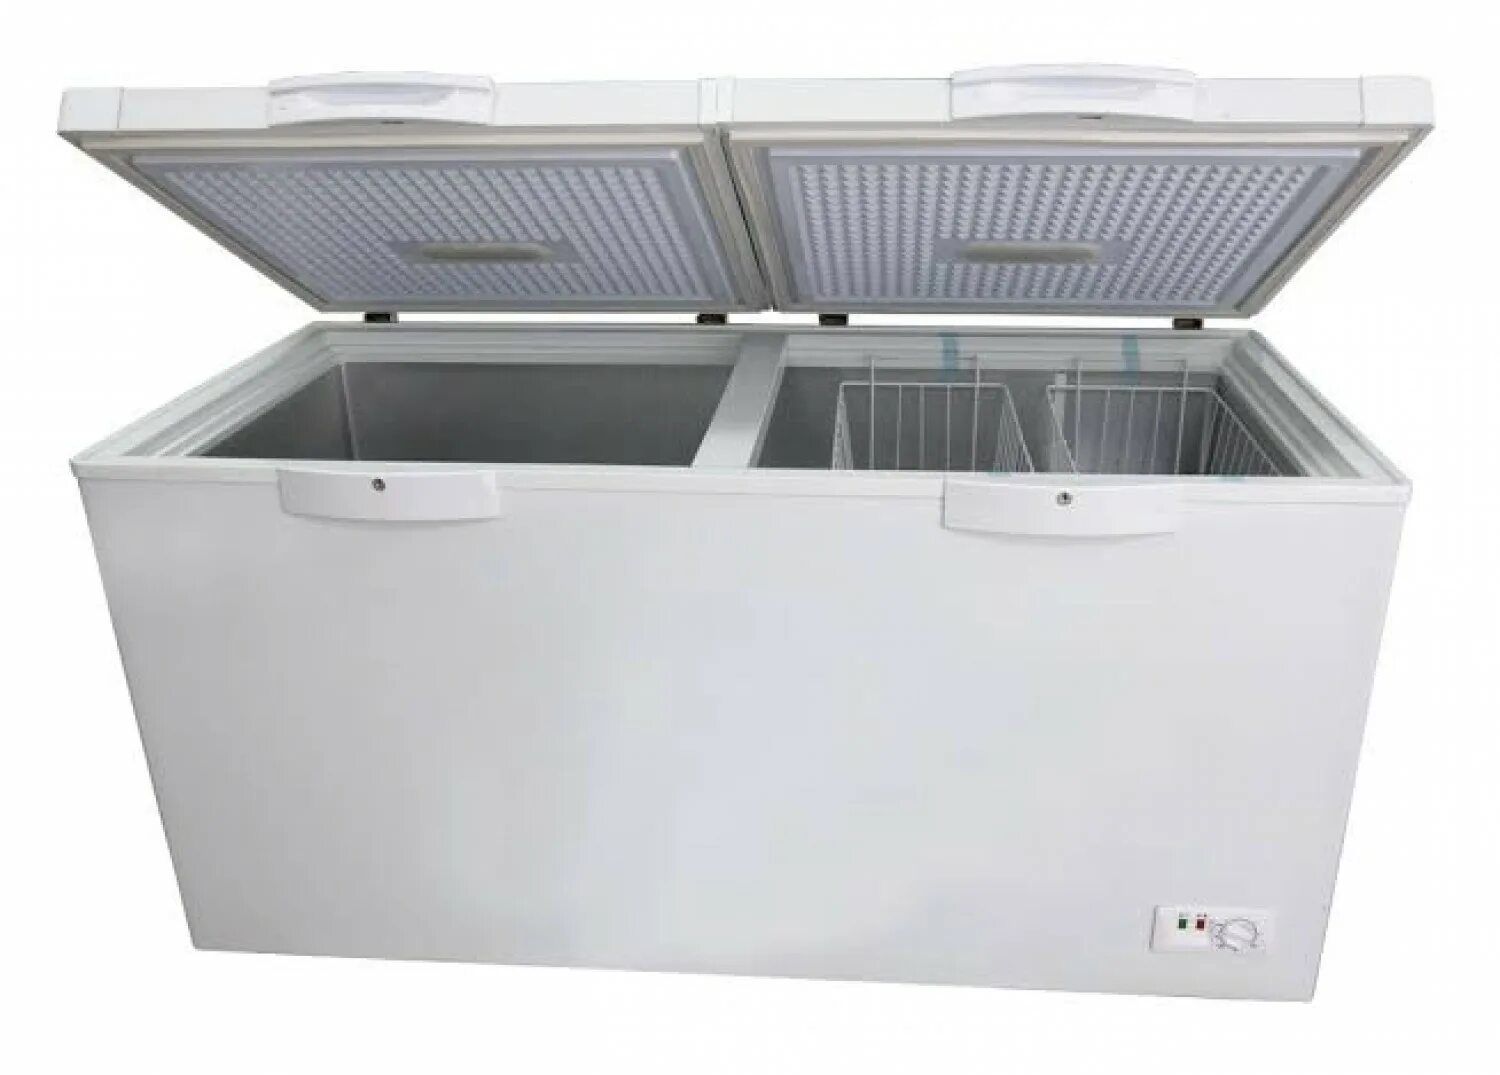 Морозильный ларь Mora MFH 9141 W. Frostor f600sd. Chest Freezer холодильник. Морозильная камера Philips Freezer afb024 PH.